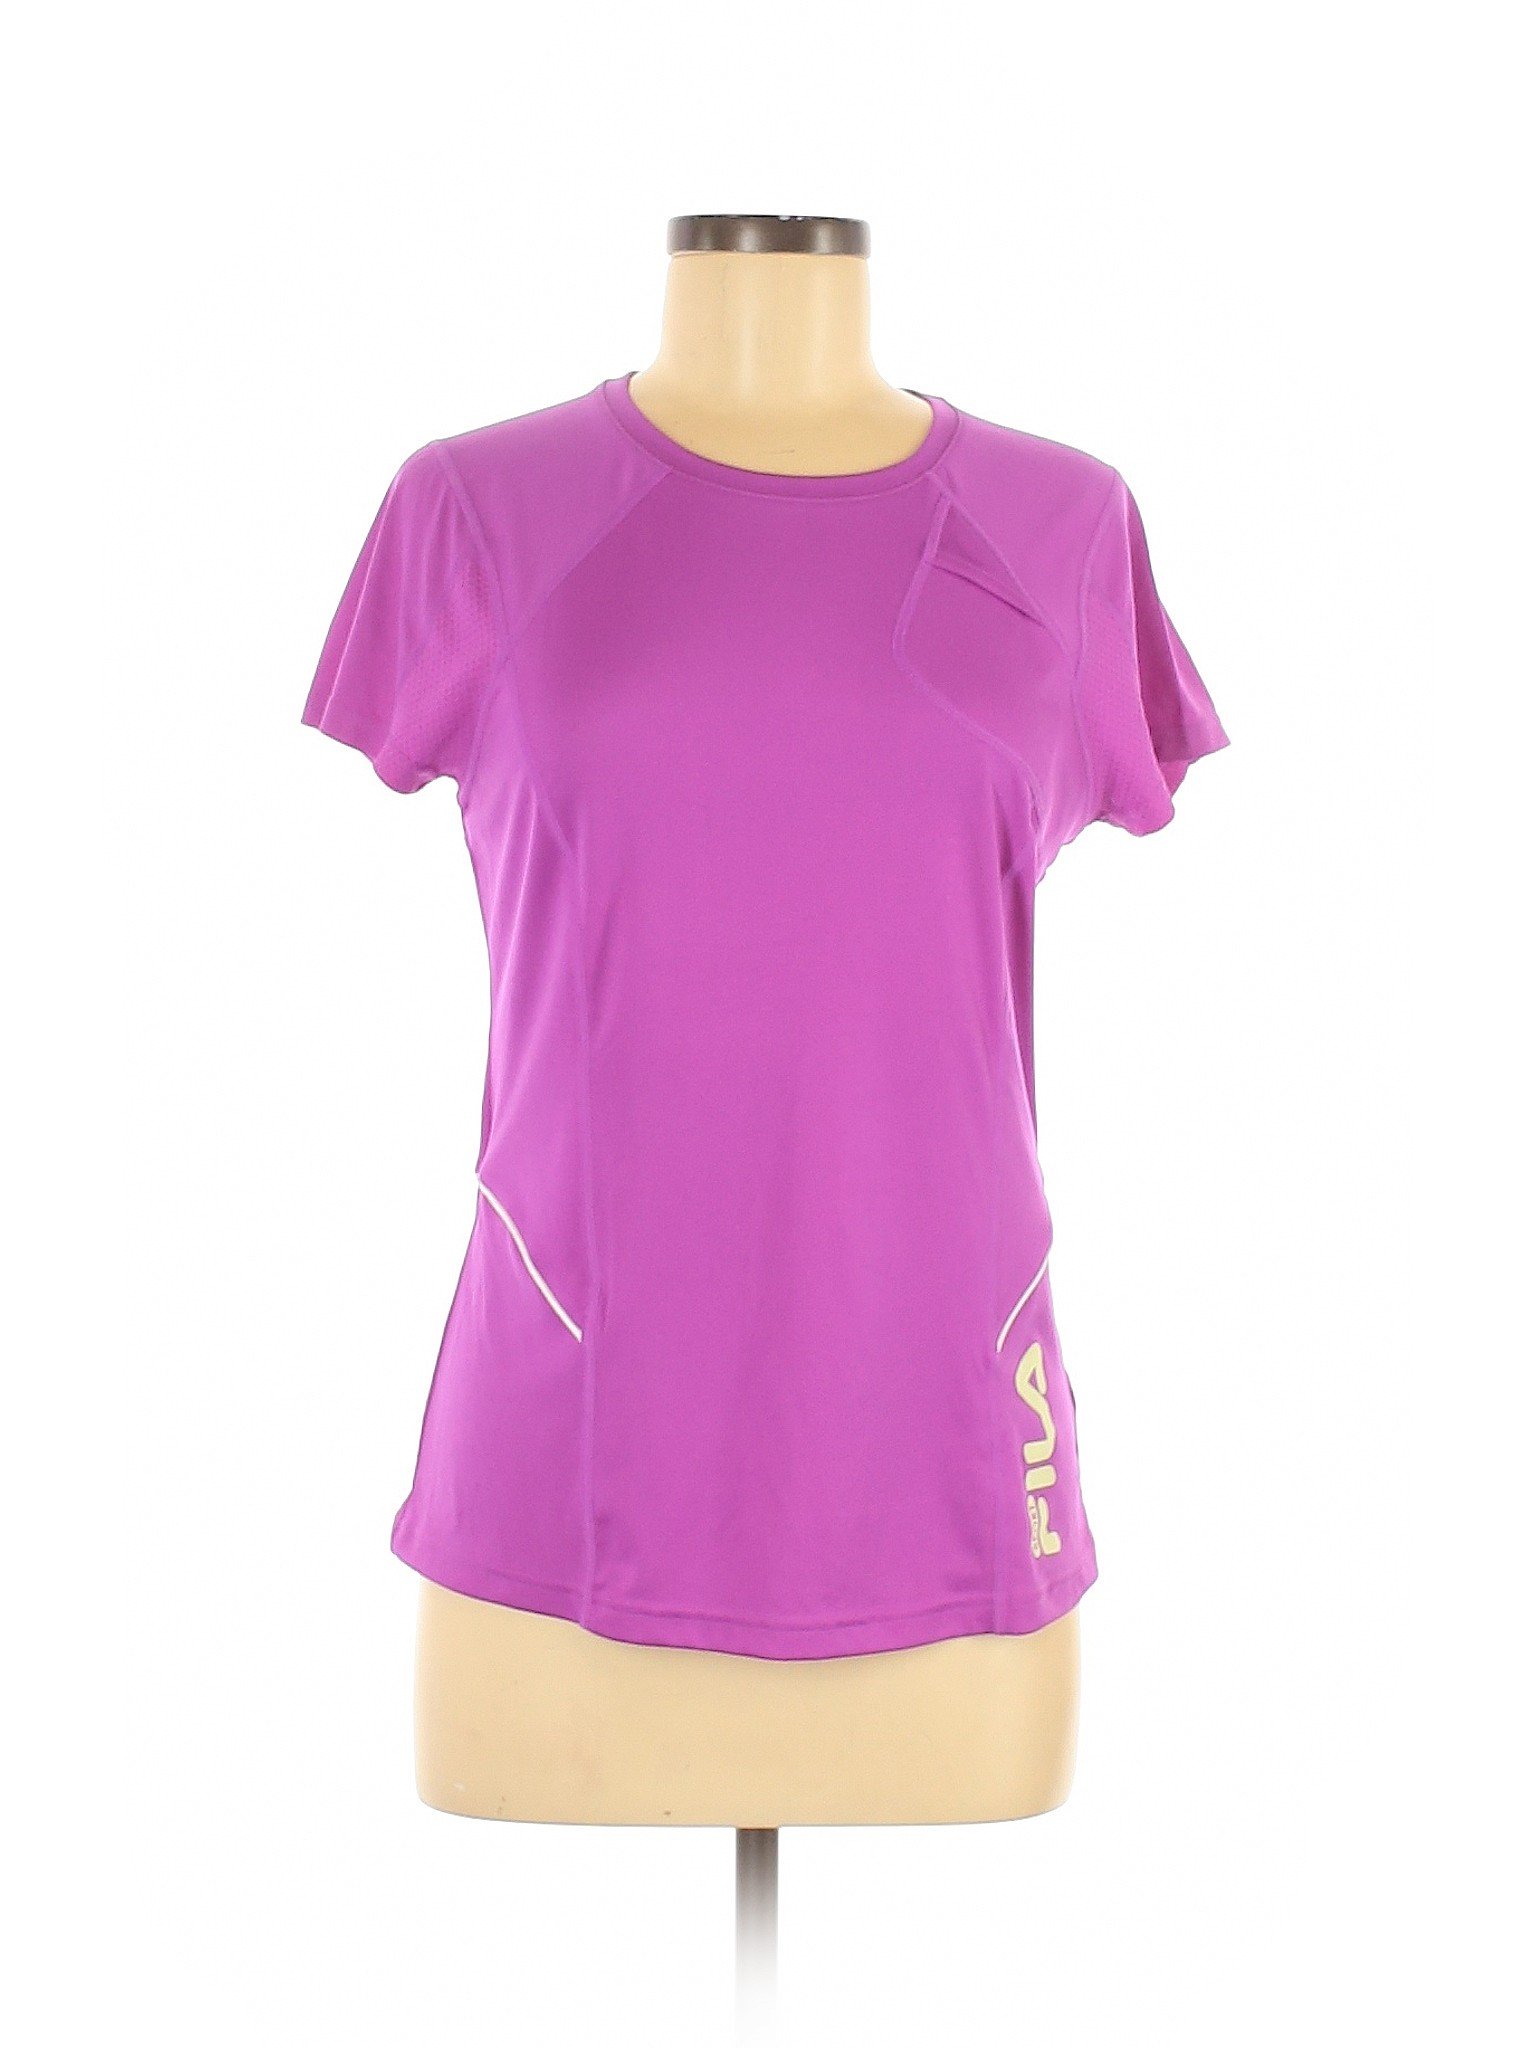 Fila Sport Women Purple Active T-Shirt M | eBay